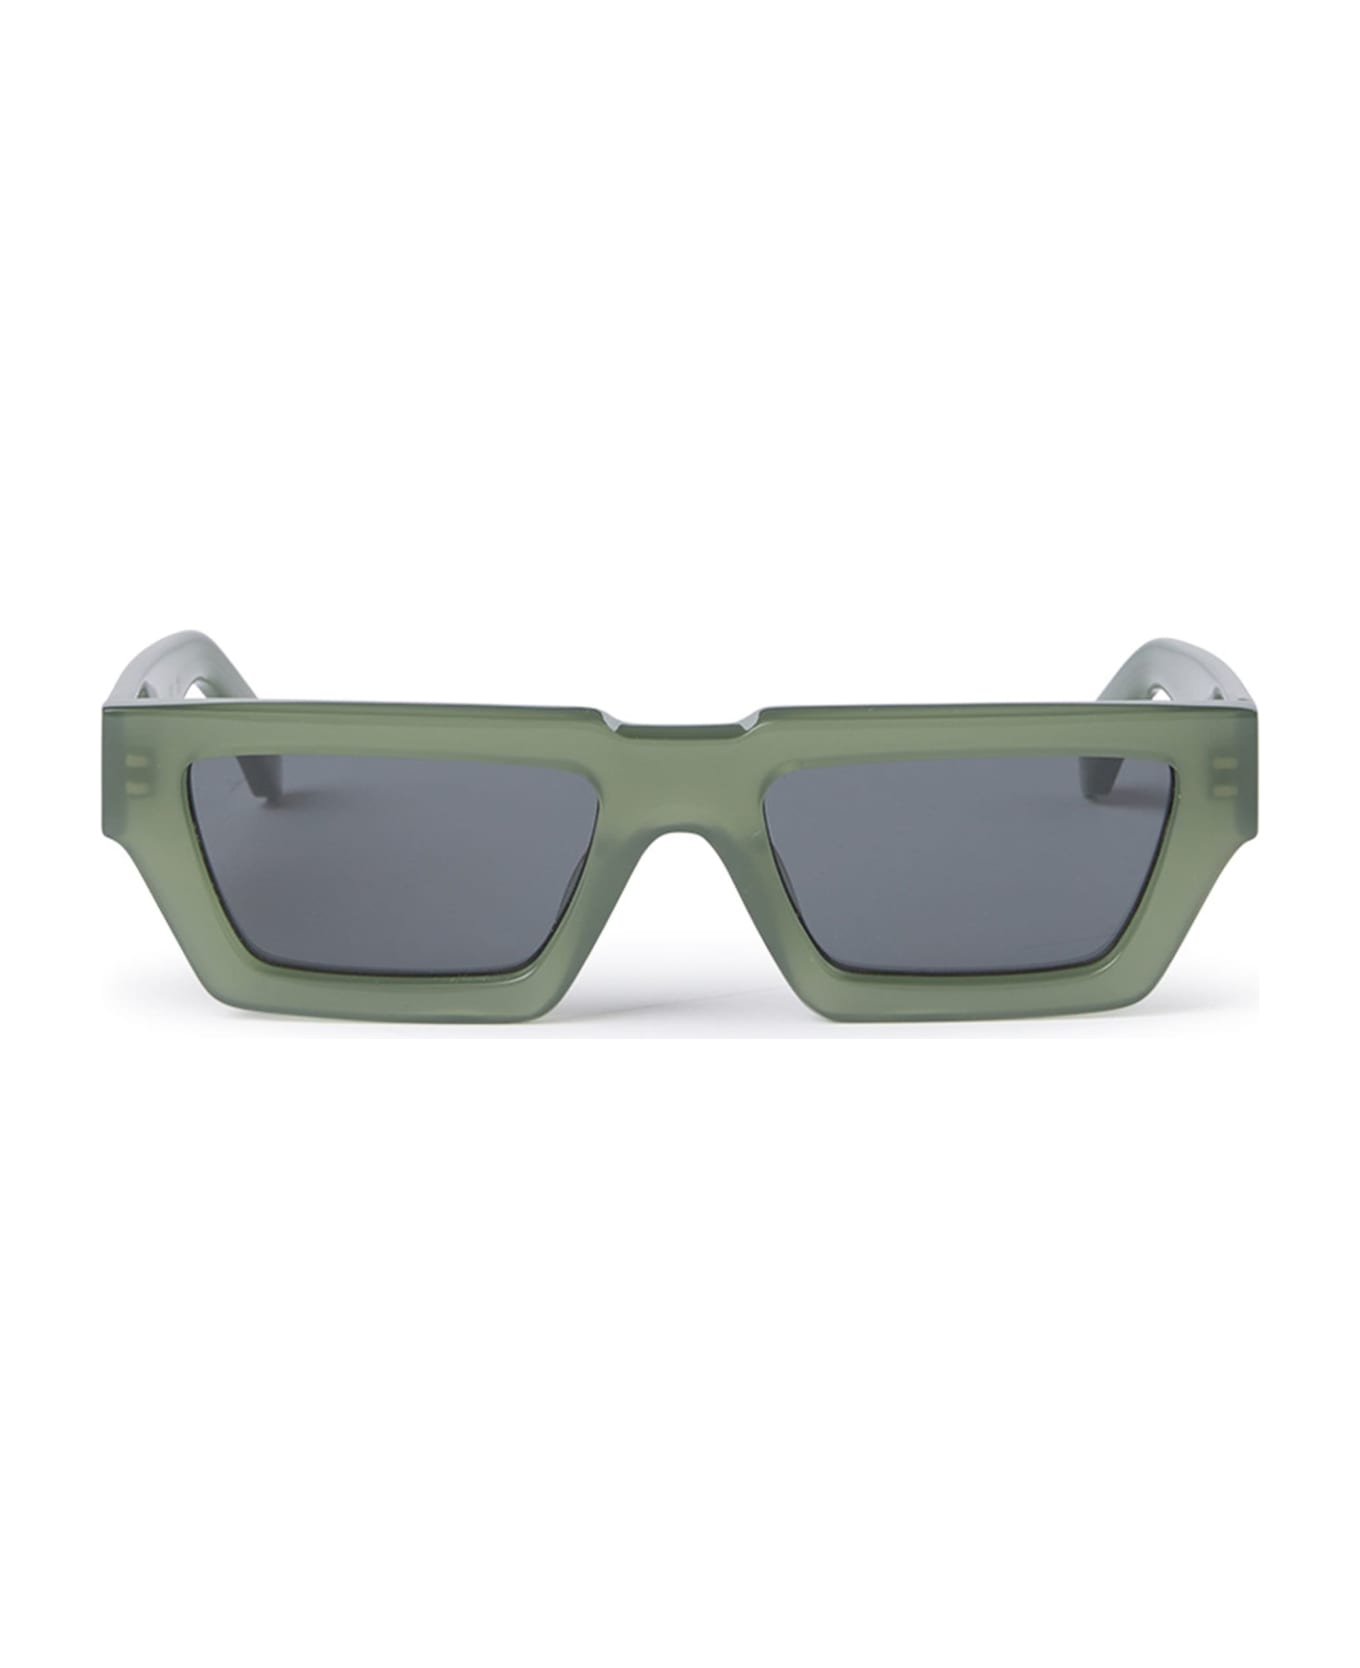 Off-White Manchester - Olive Green / Dark Grey Sunglasses - green